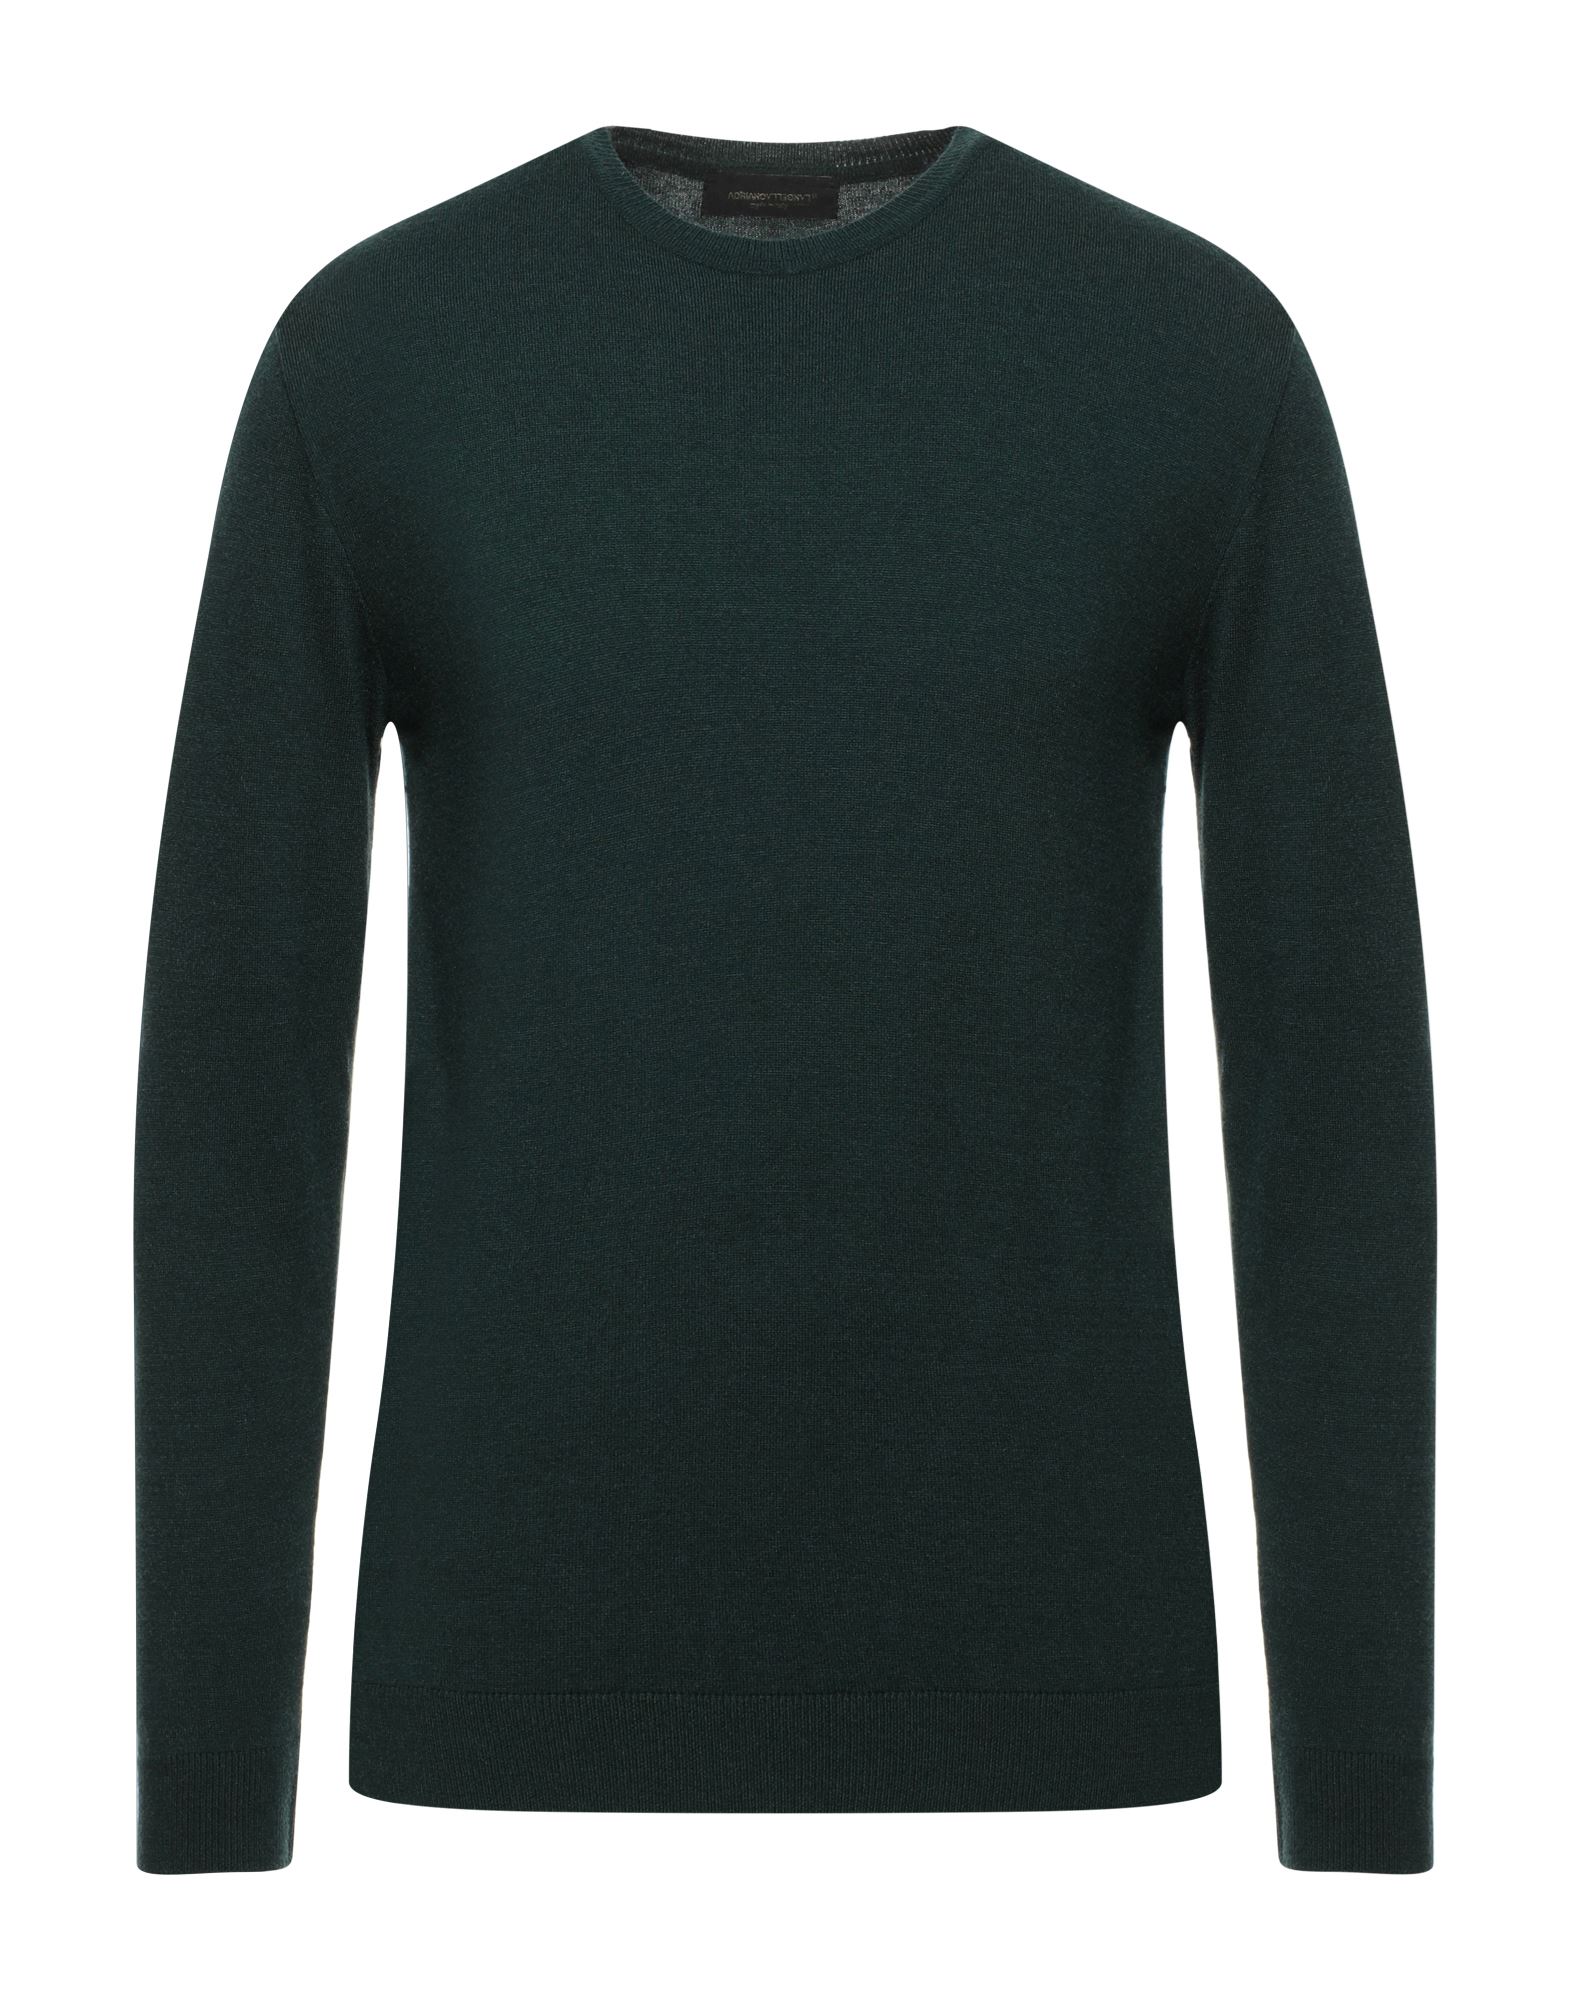 Adriano Langella Sweaters In Dark Green